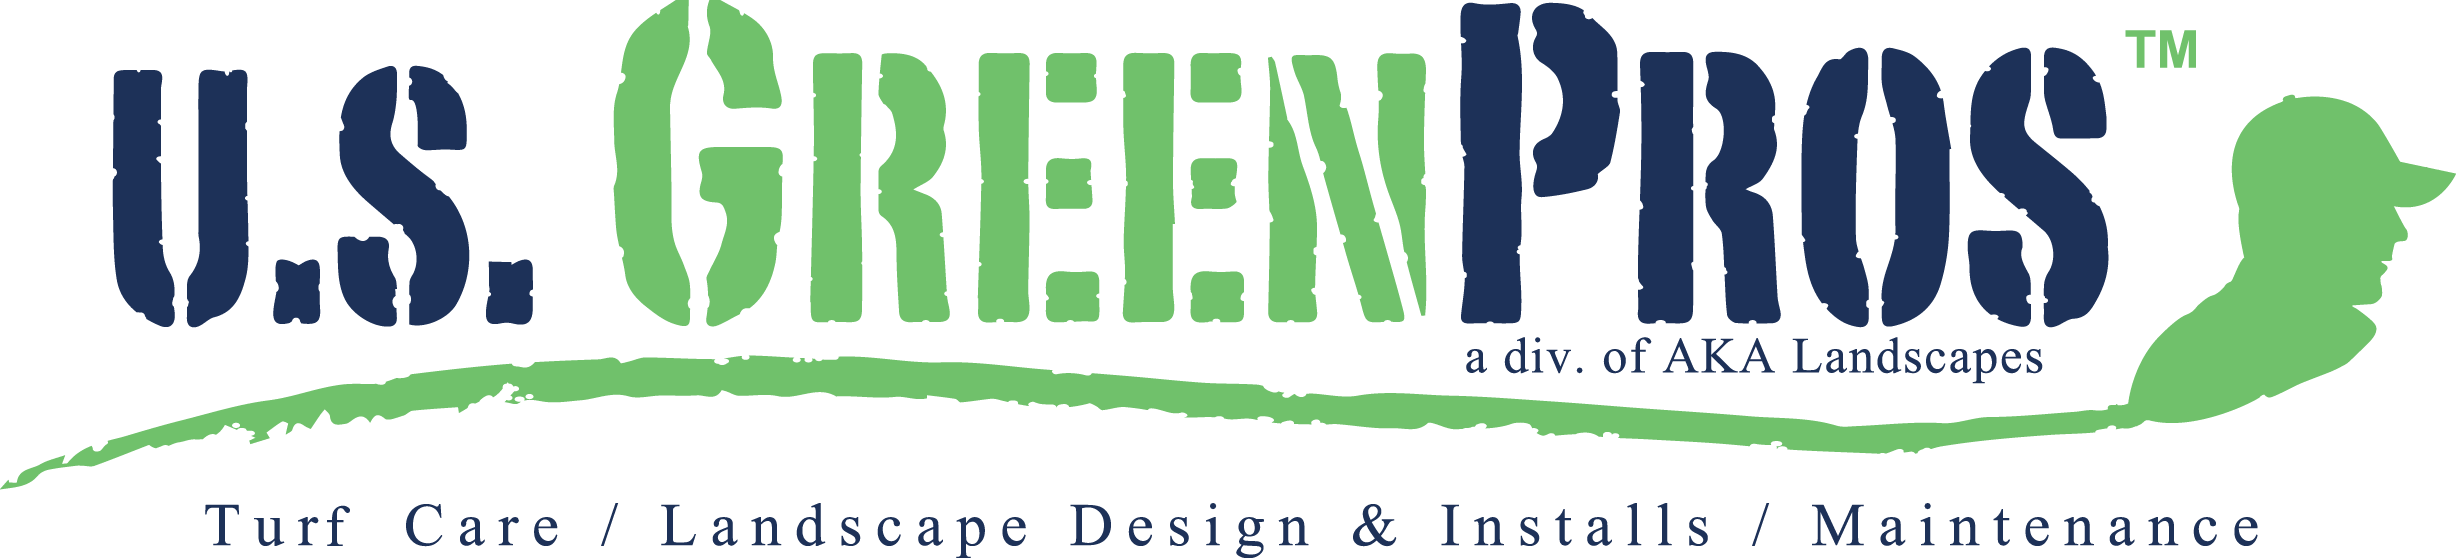 U.S. Green Pros a Divison of AKA Landscapes, LLC Logo